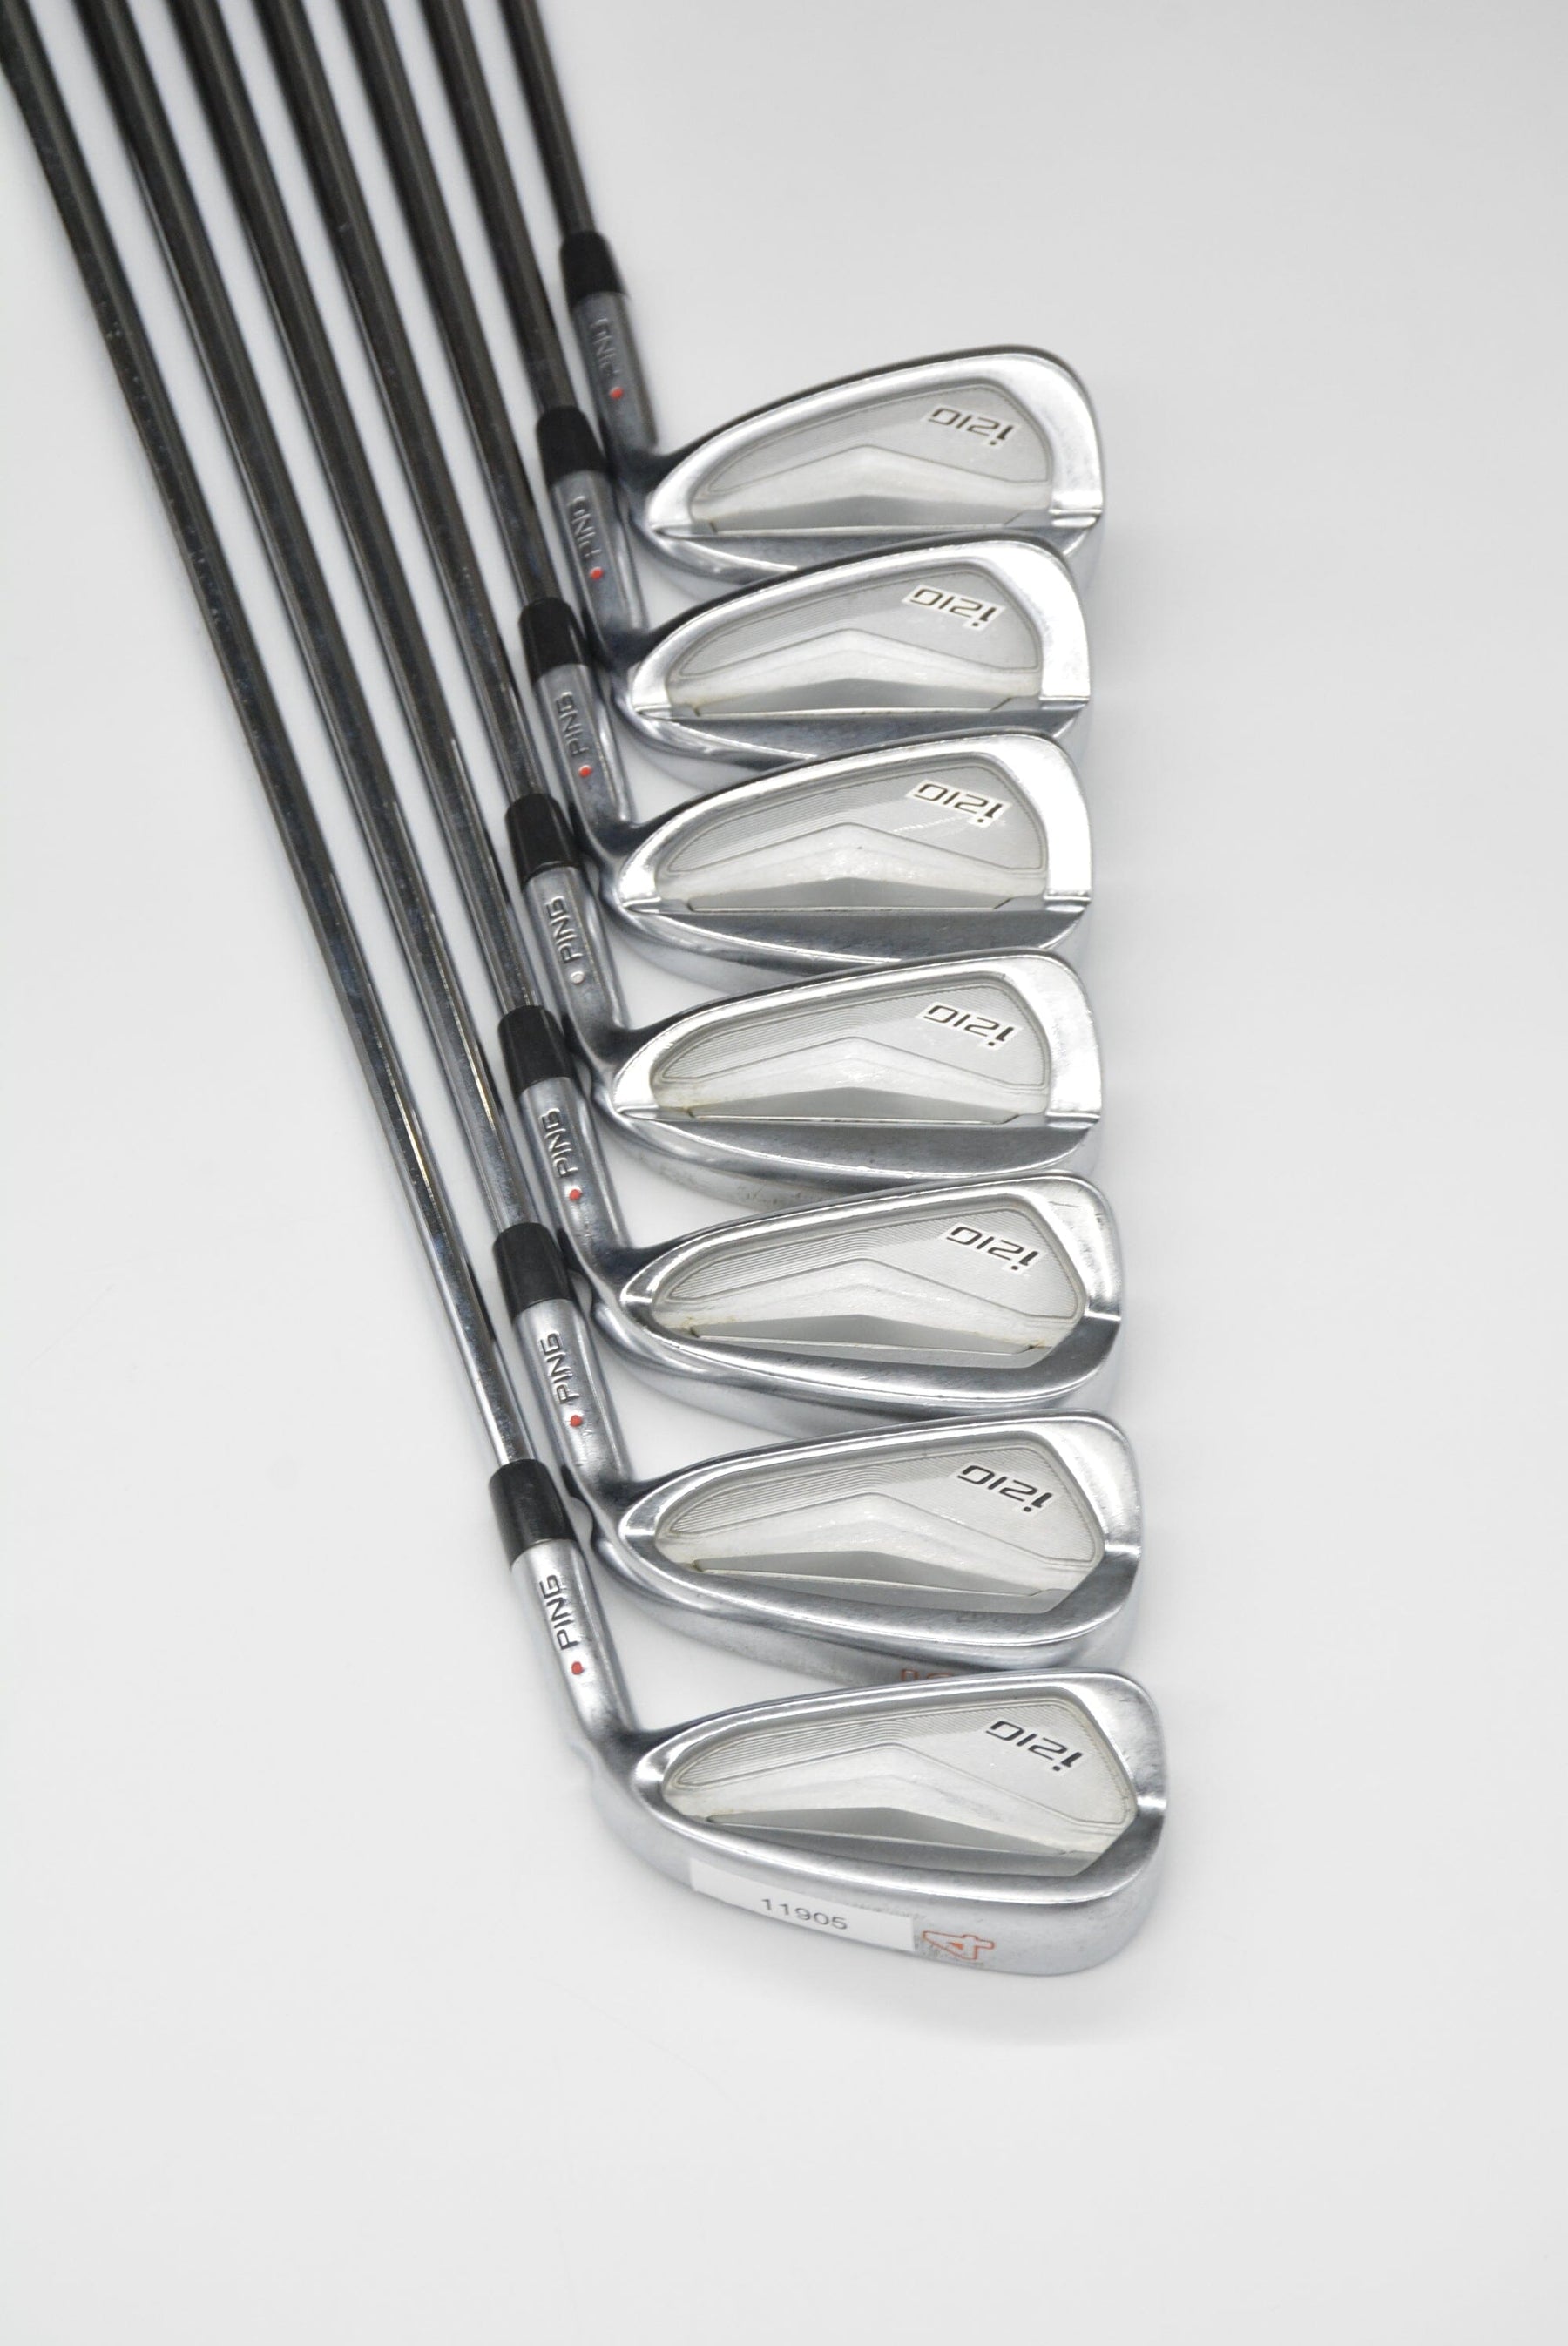 Ping I210 4-PW Iron Set S Flex +0.75" Orange Dot Golf Clubs GolfRoots 